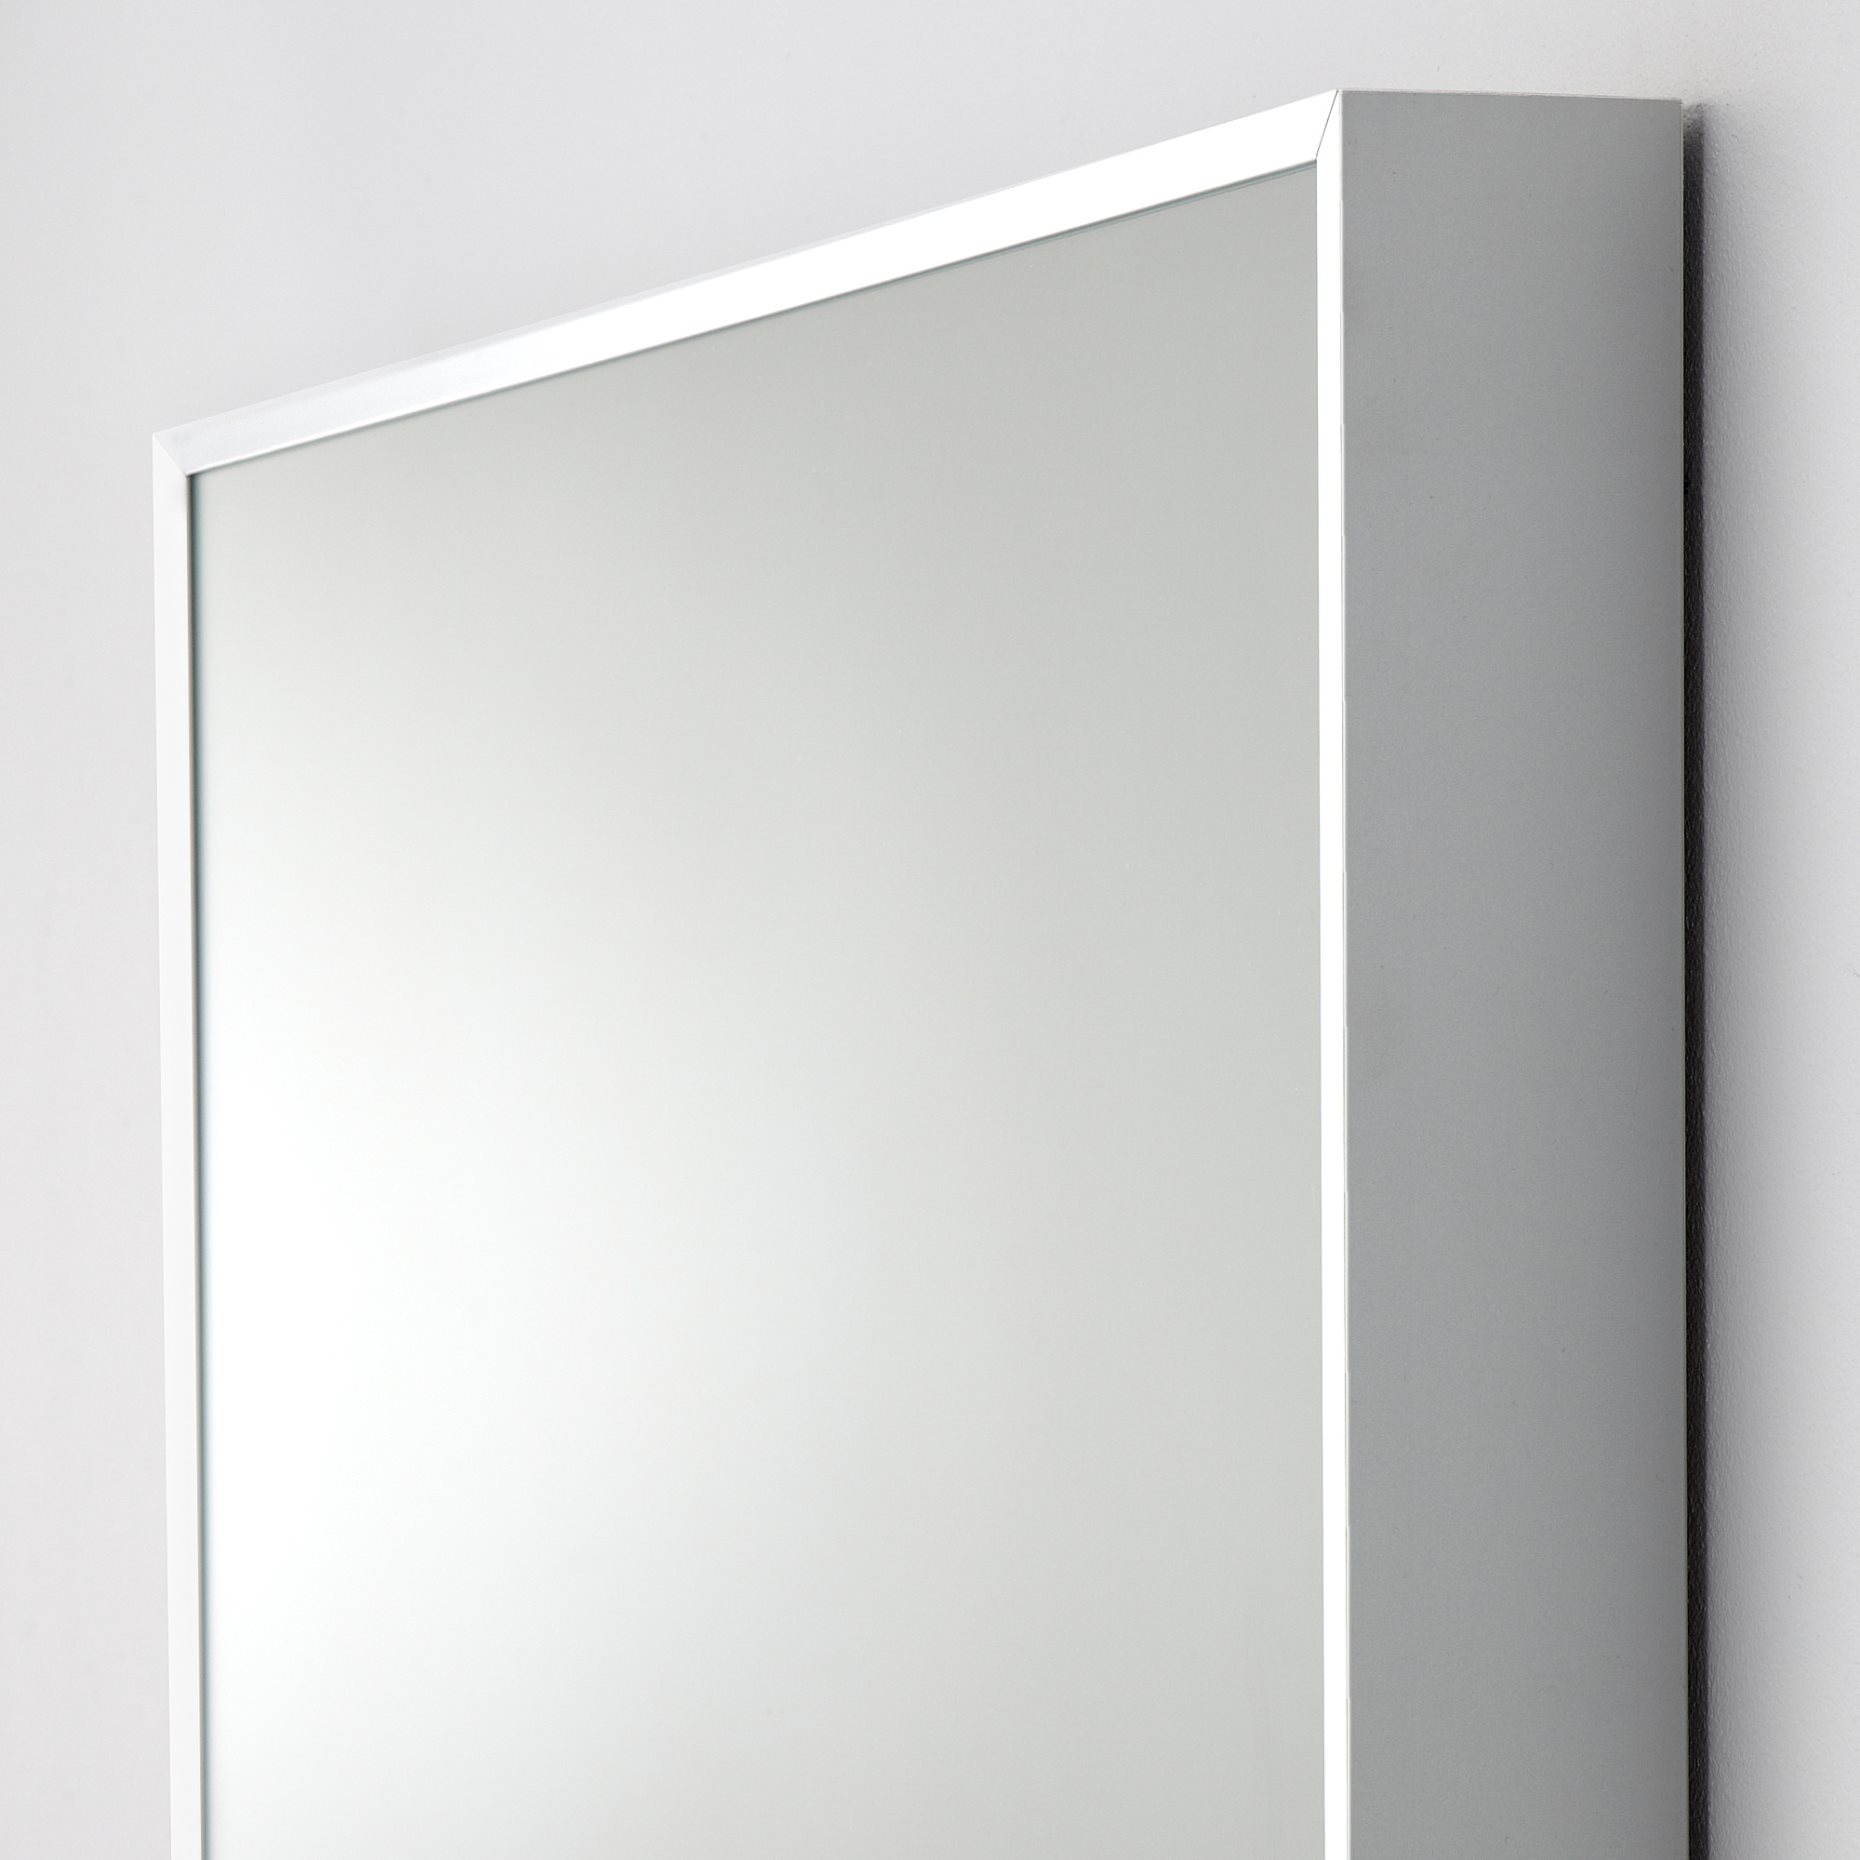 HOVET, καθρέφτης, 78x196 cm, 500.382.13